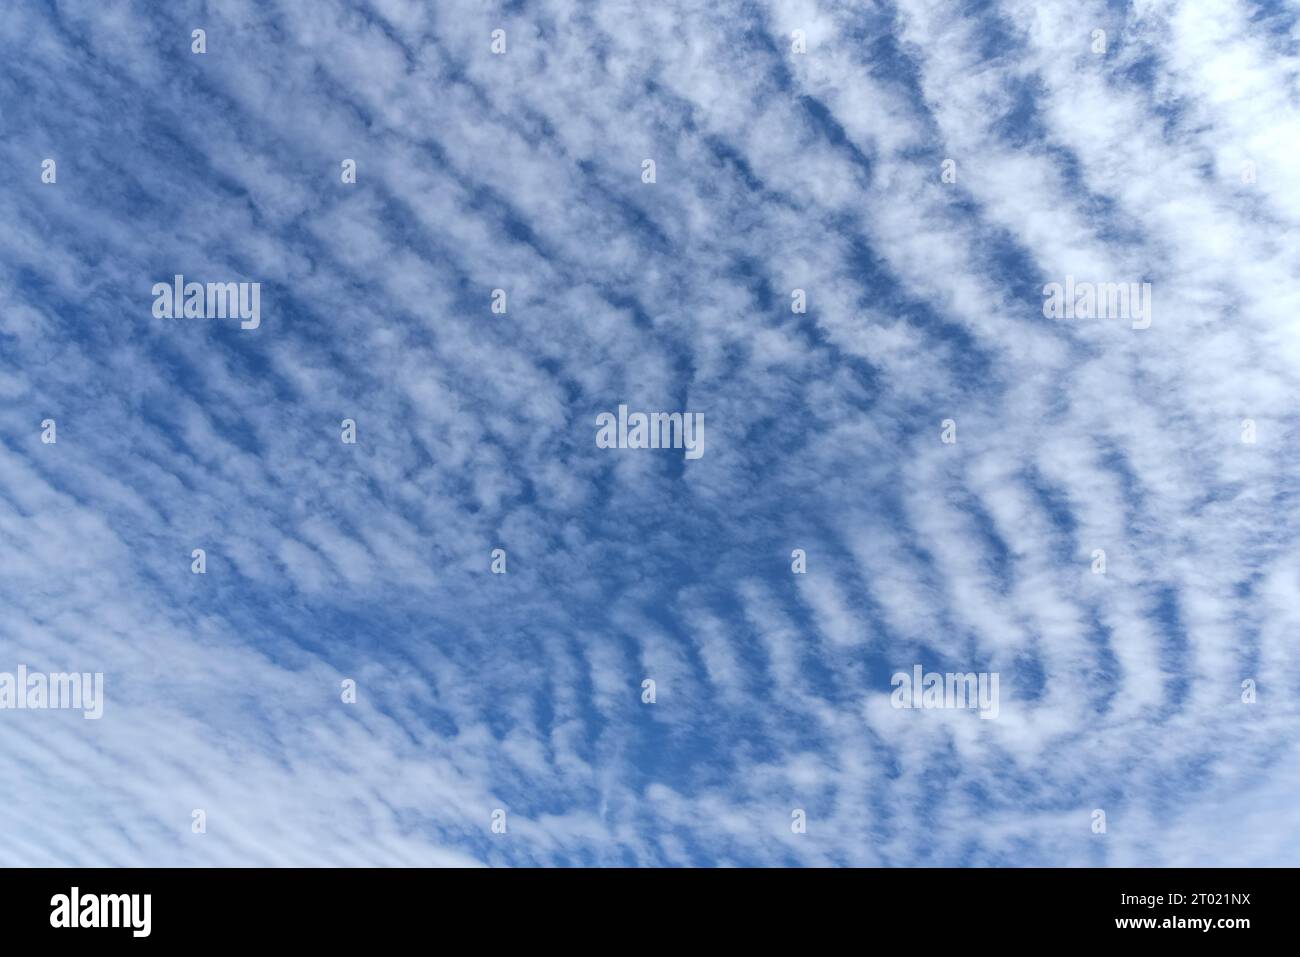 Altocumulus undulatus clouds forming a ripple effect pattern Stock Photo